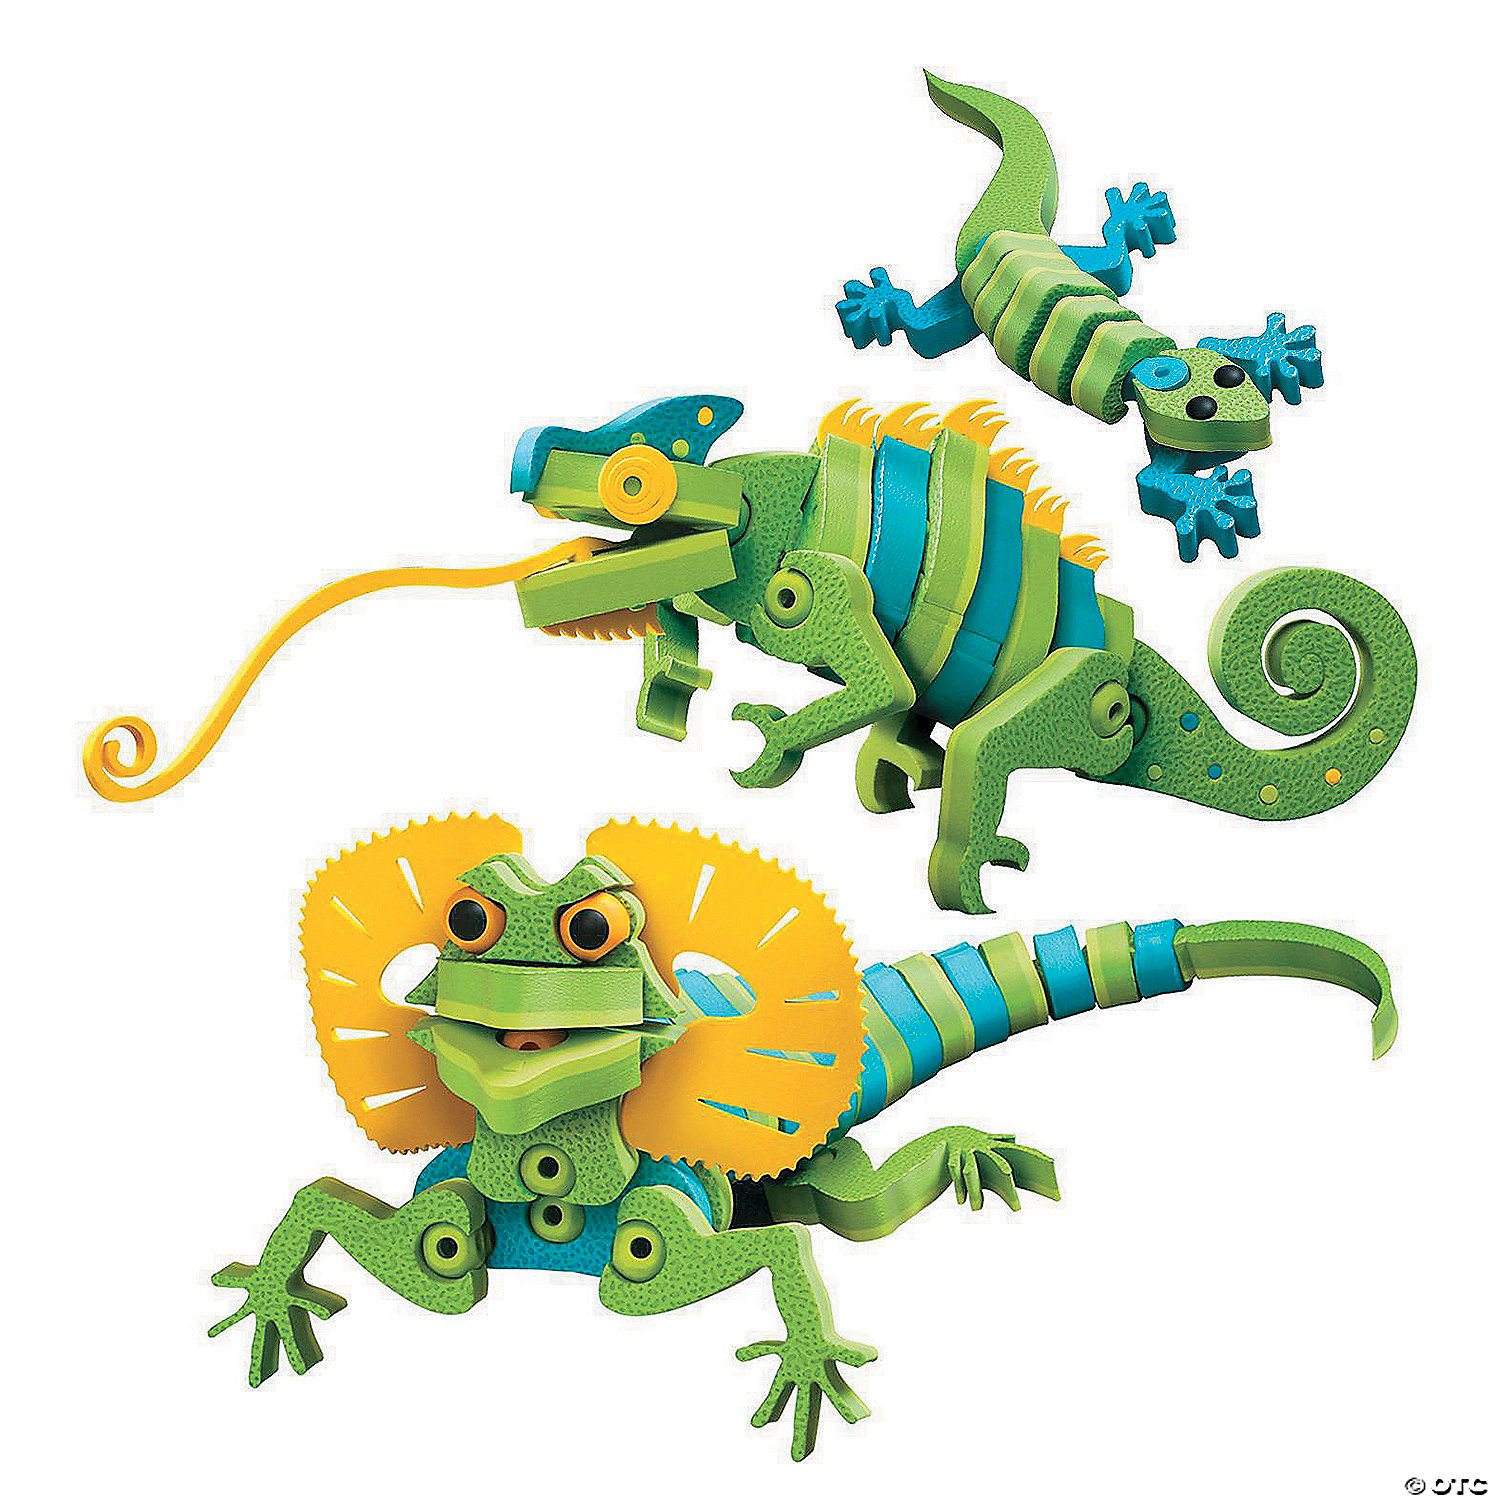 Bloco Toys Lizards & Chameleons Reptiles Creatures 192 Pieces DIY Building Construction Set Gecko STEM Toy 